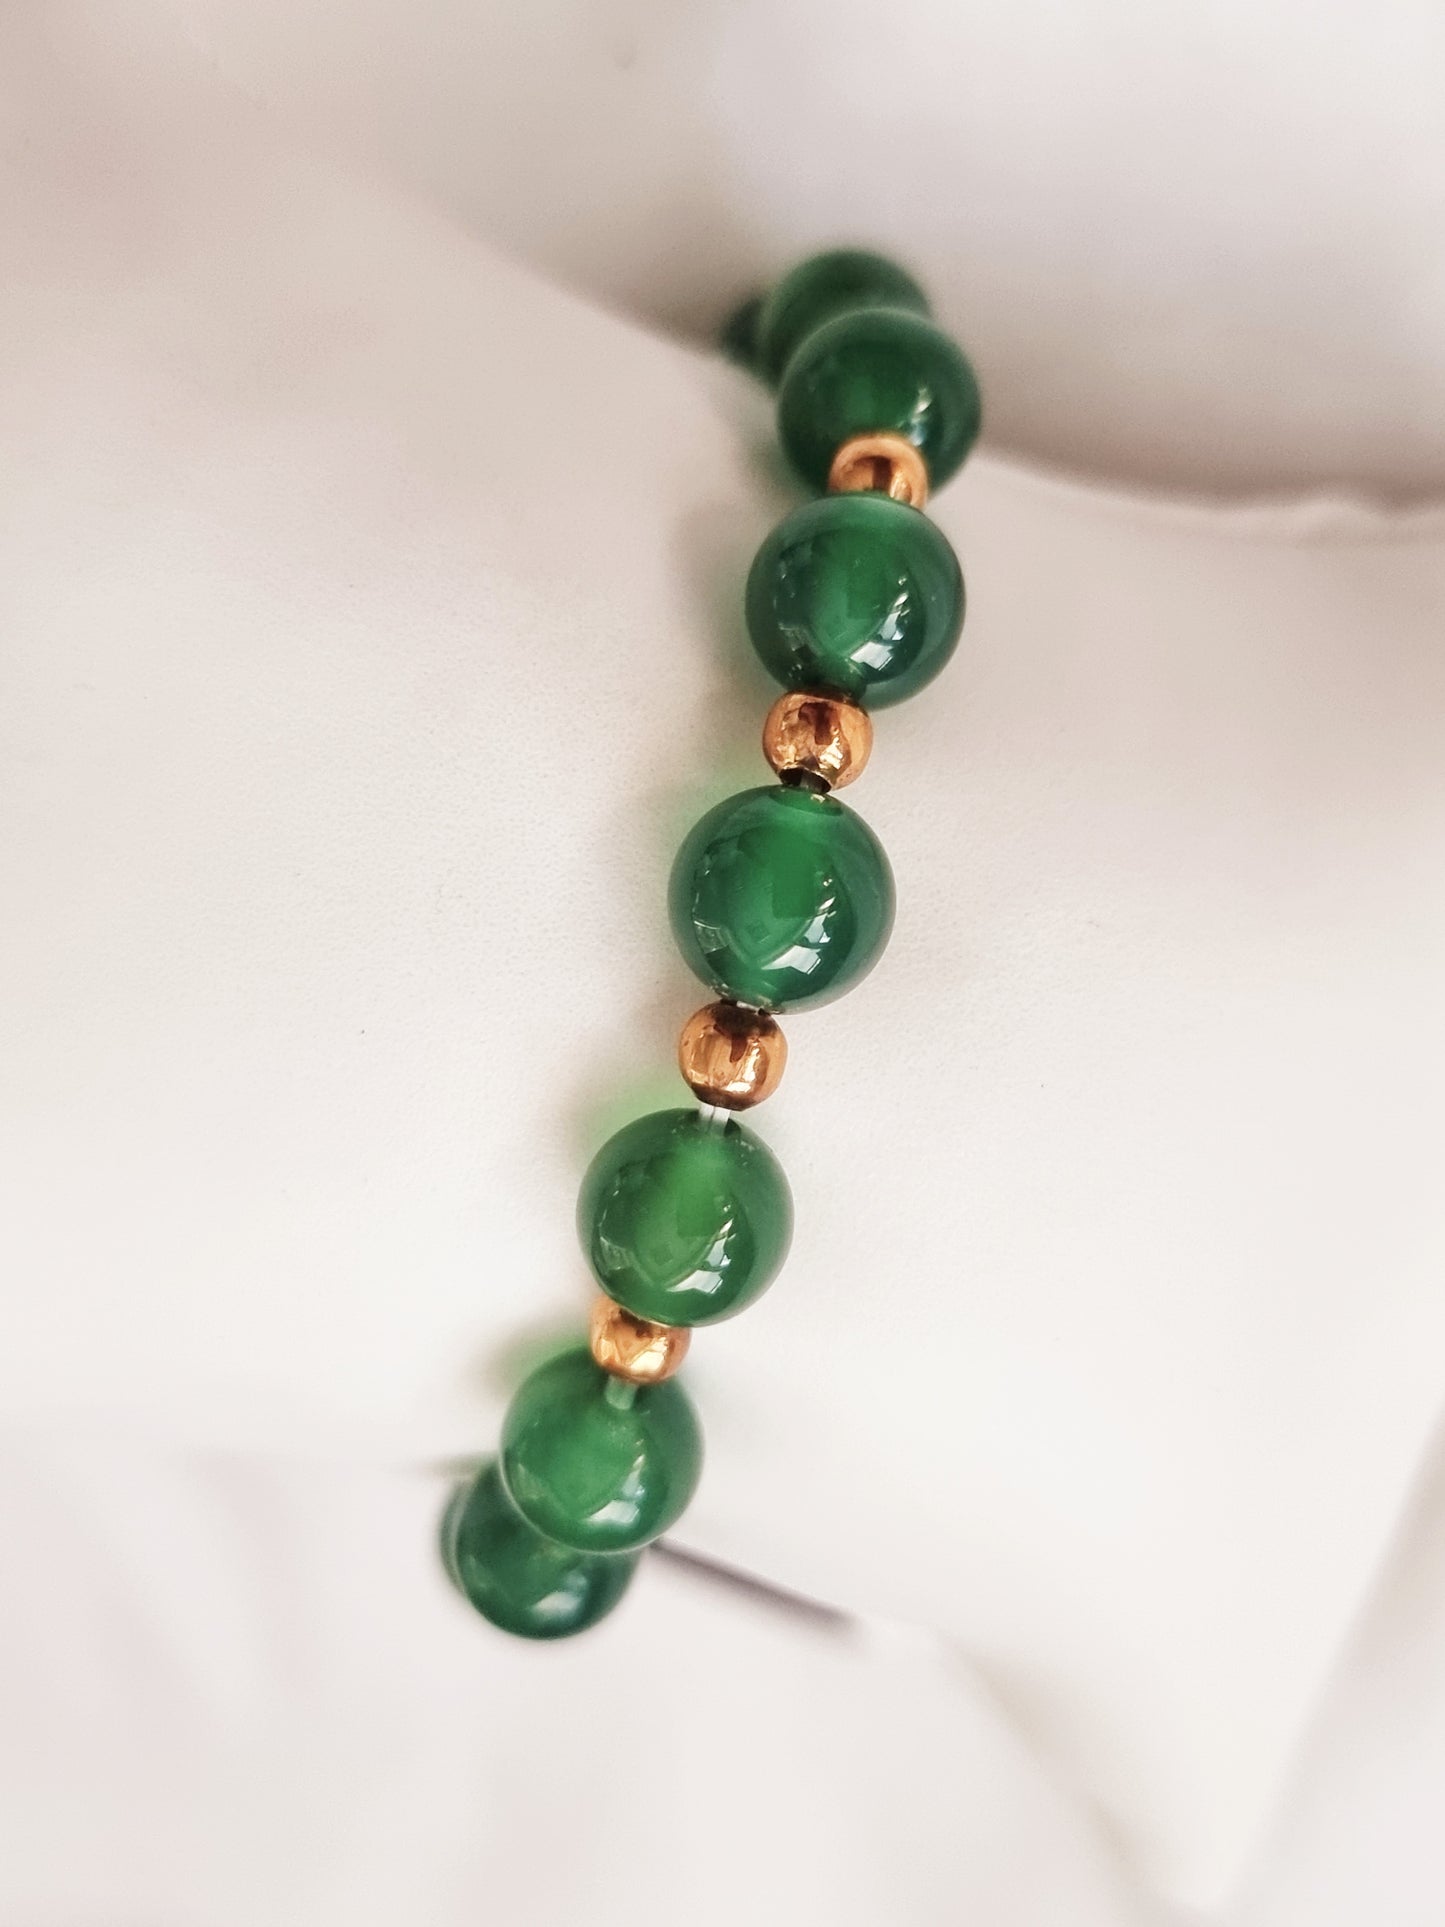 Jade-Armband Grün mit Gold